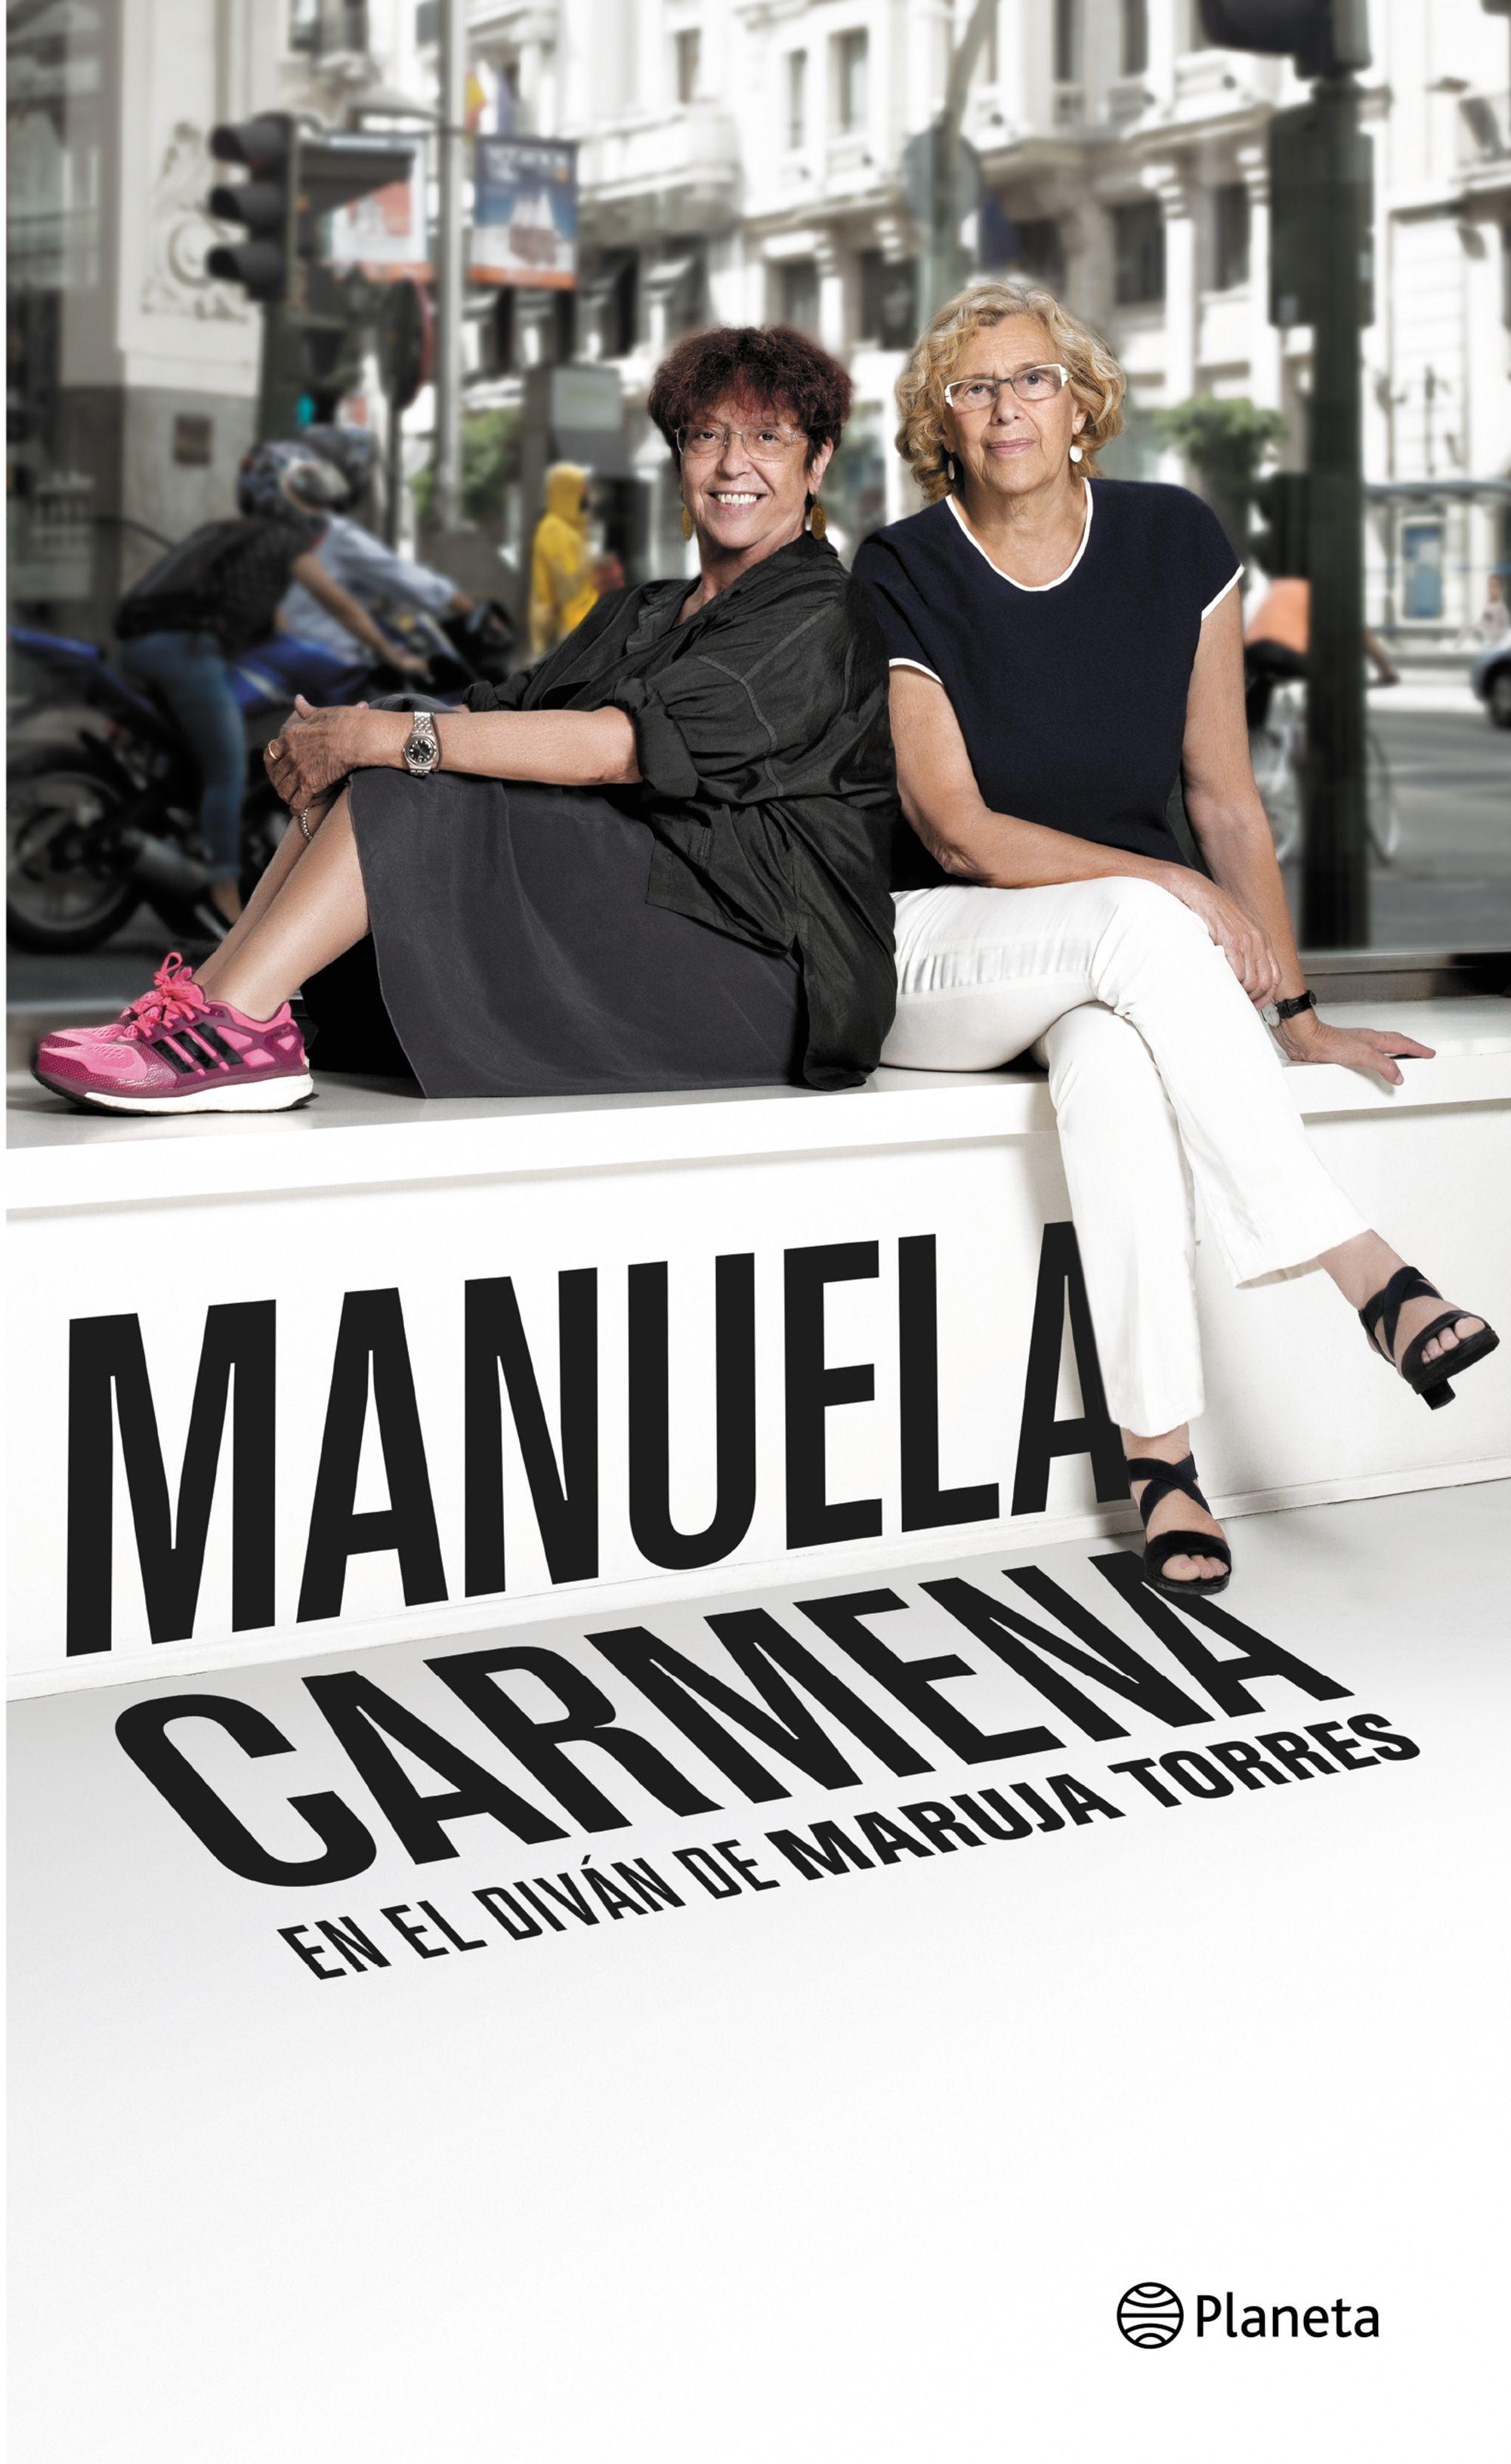 Manuela Carmena "En el Diván de Maruja Torres"